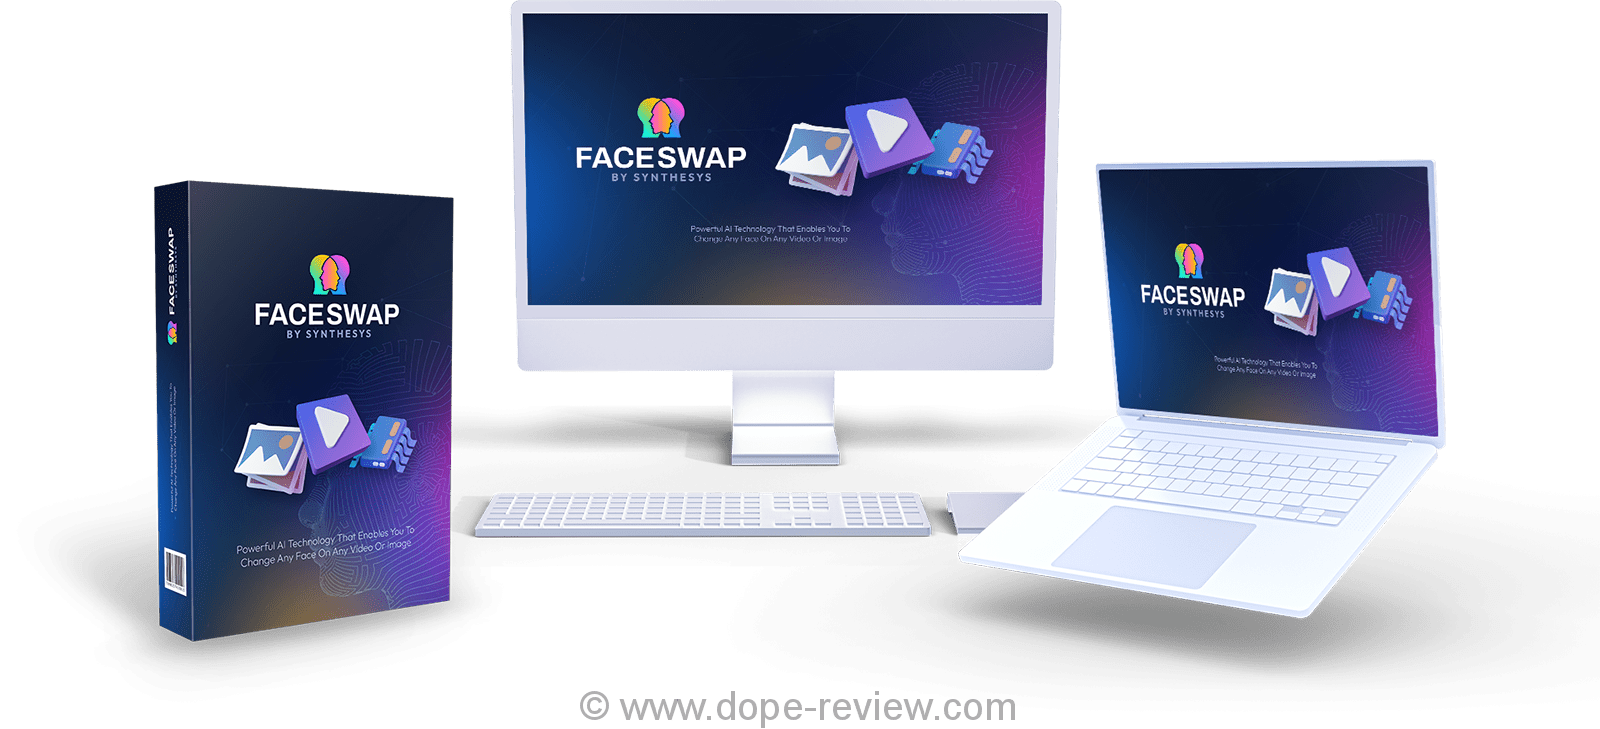 FaceSwap Review